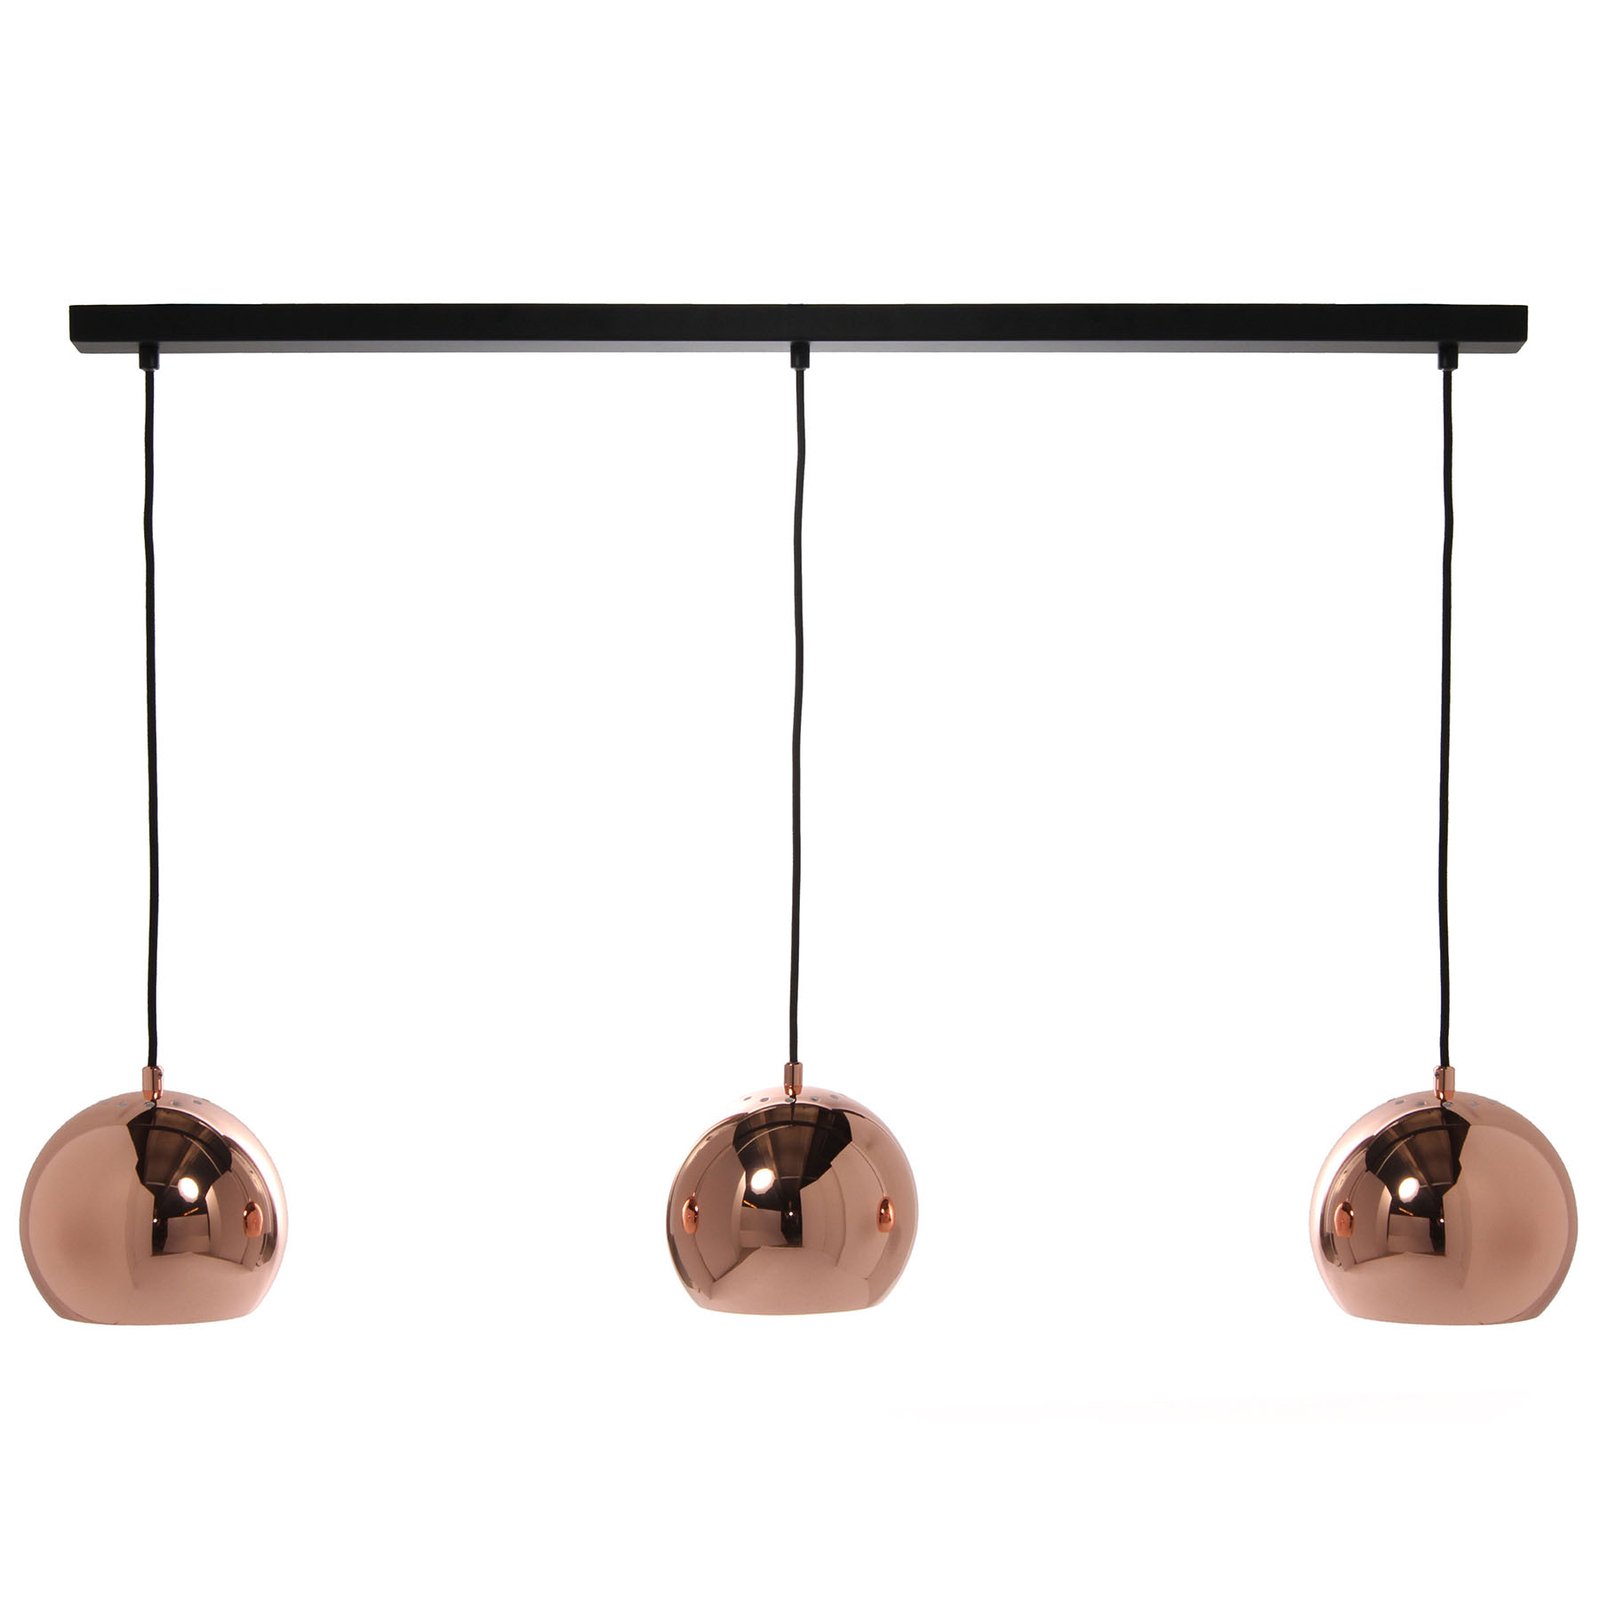 FRANDSEN Ball Track hanglamp 3-lamps koper glanzend